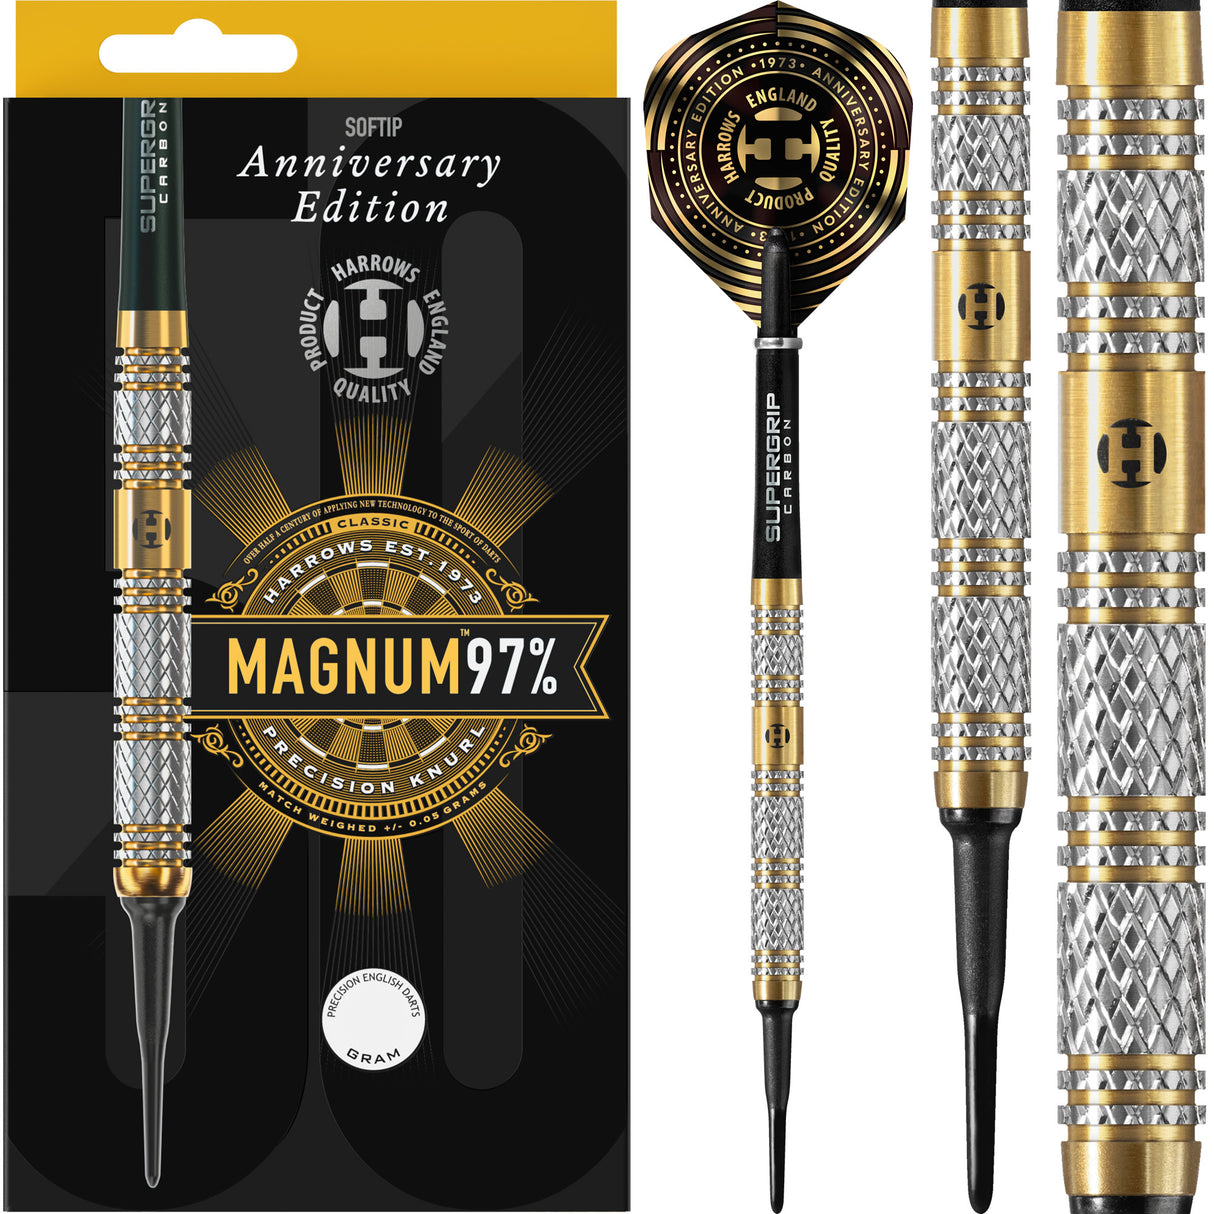 Harrows Magnum Darts - Soft Tip - 97% - Anniversary Edition - Gold Titanium